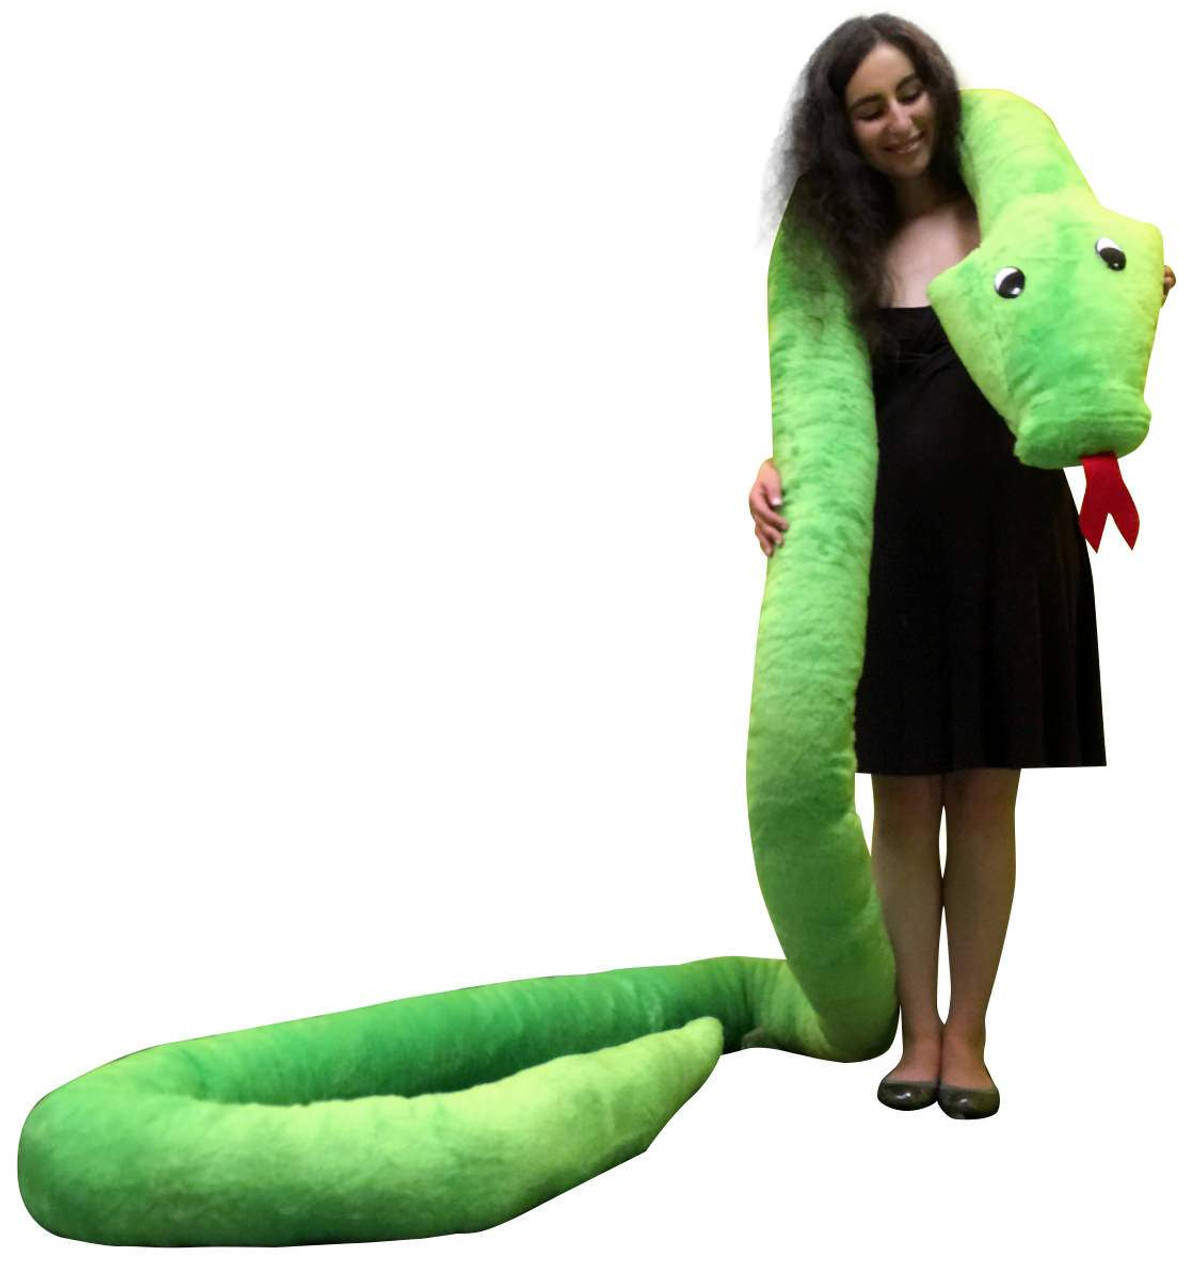 American Made Giant Stuffed Snake 18 Feet Long Soft Green Big Plush Serpent